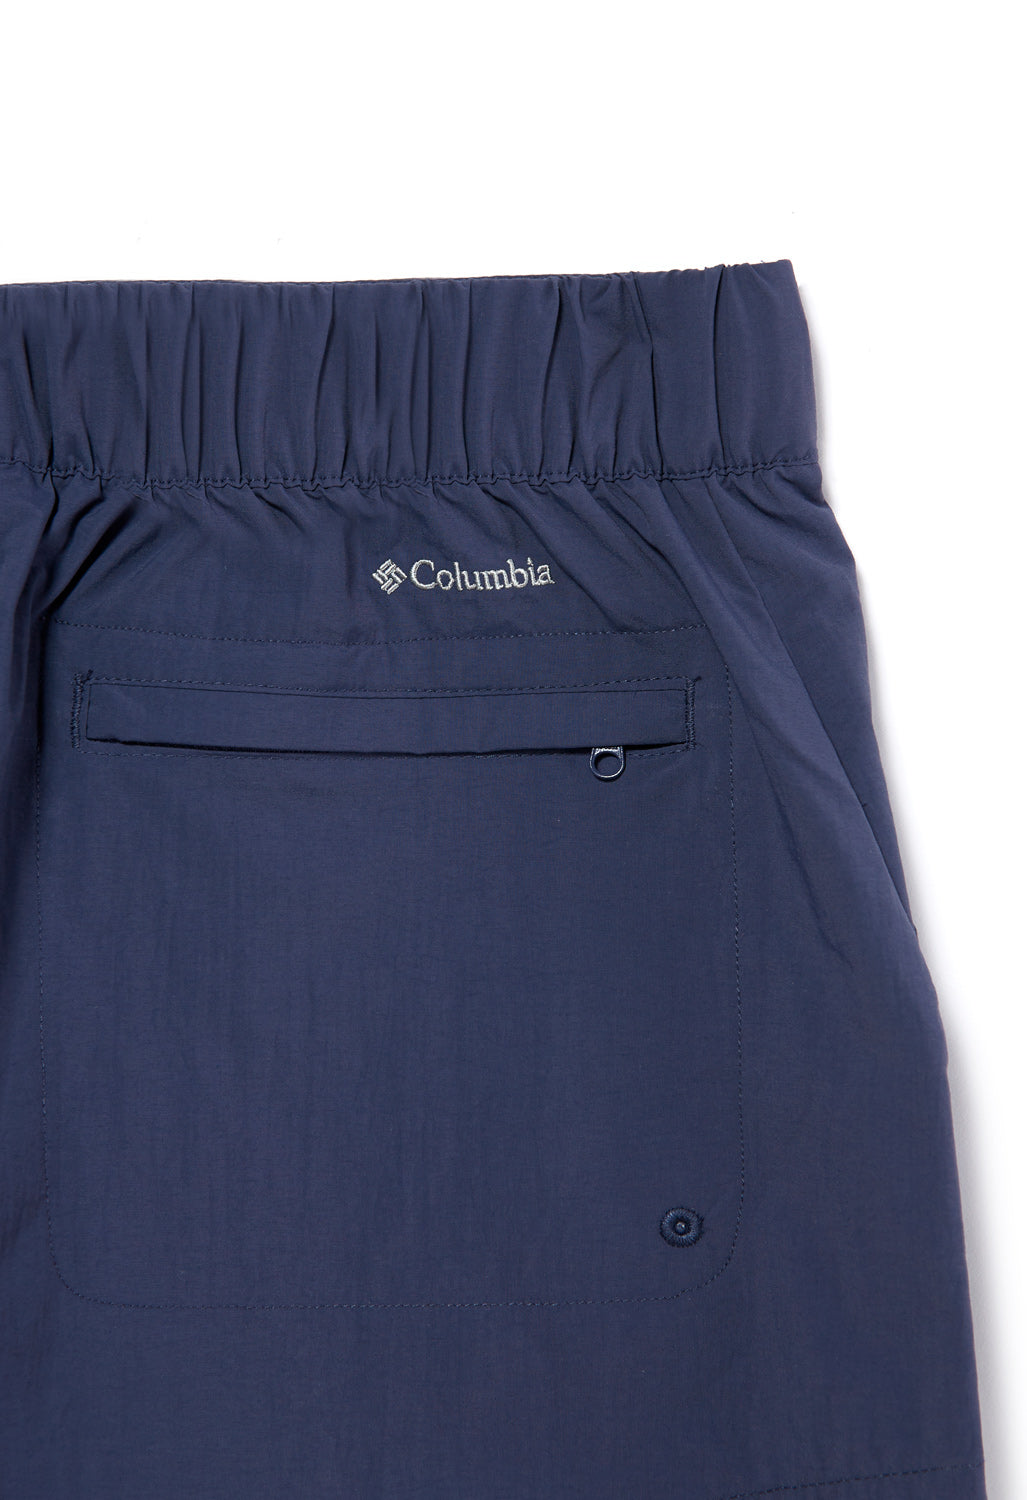 Columbia Women's Summerdry Cargo Shorts - Nocturnal